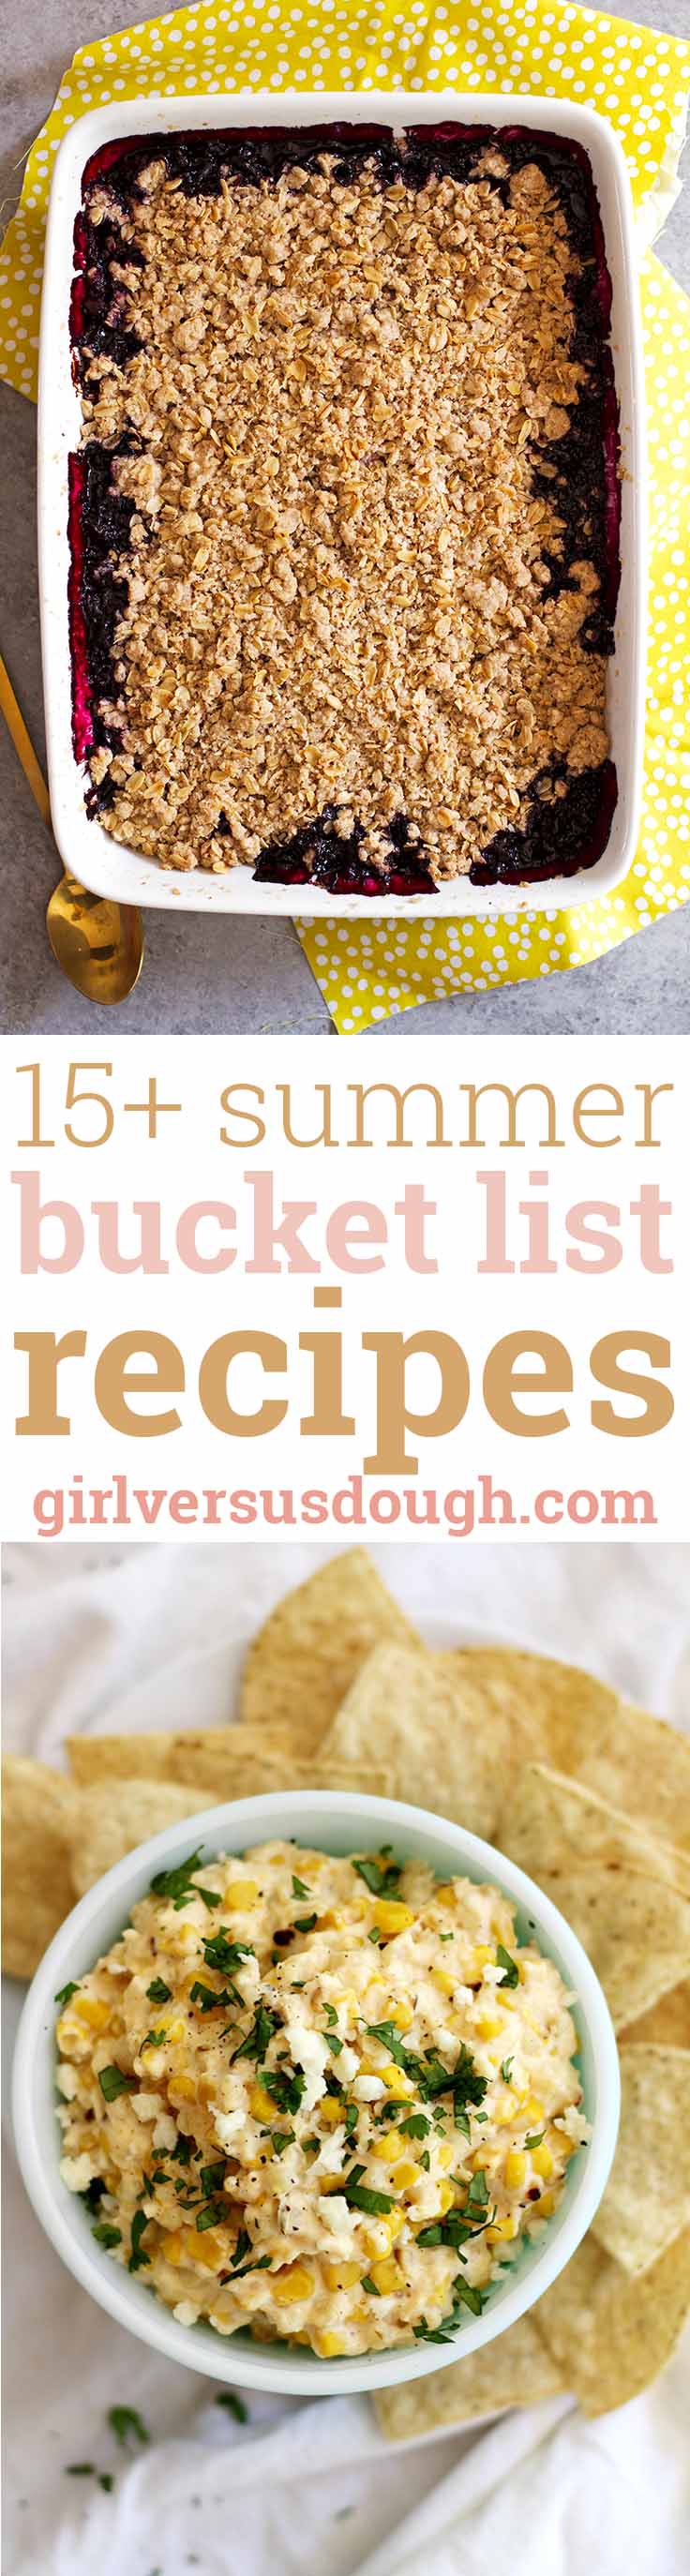 15+ Summer Bucket List Recipes -- These are THE recipes to make before summer ends. girlversusdough.com @girlversusdough